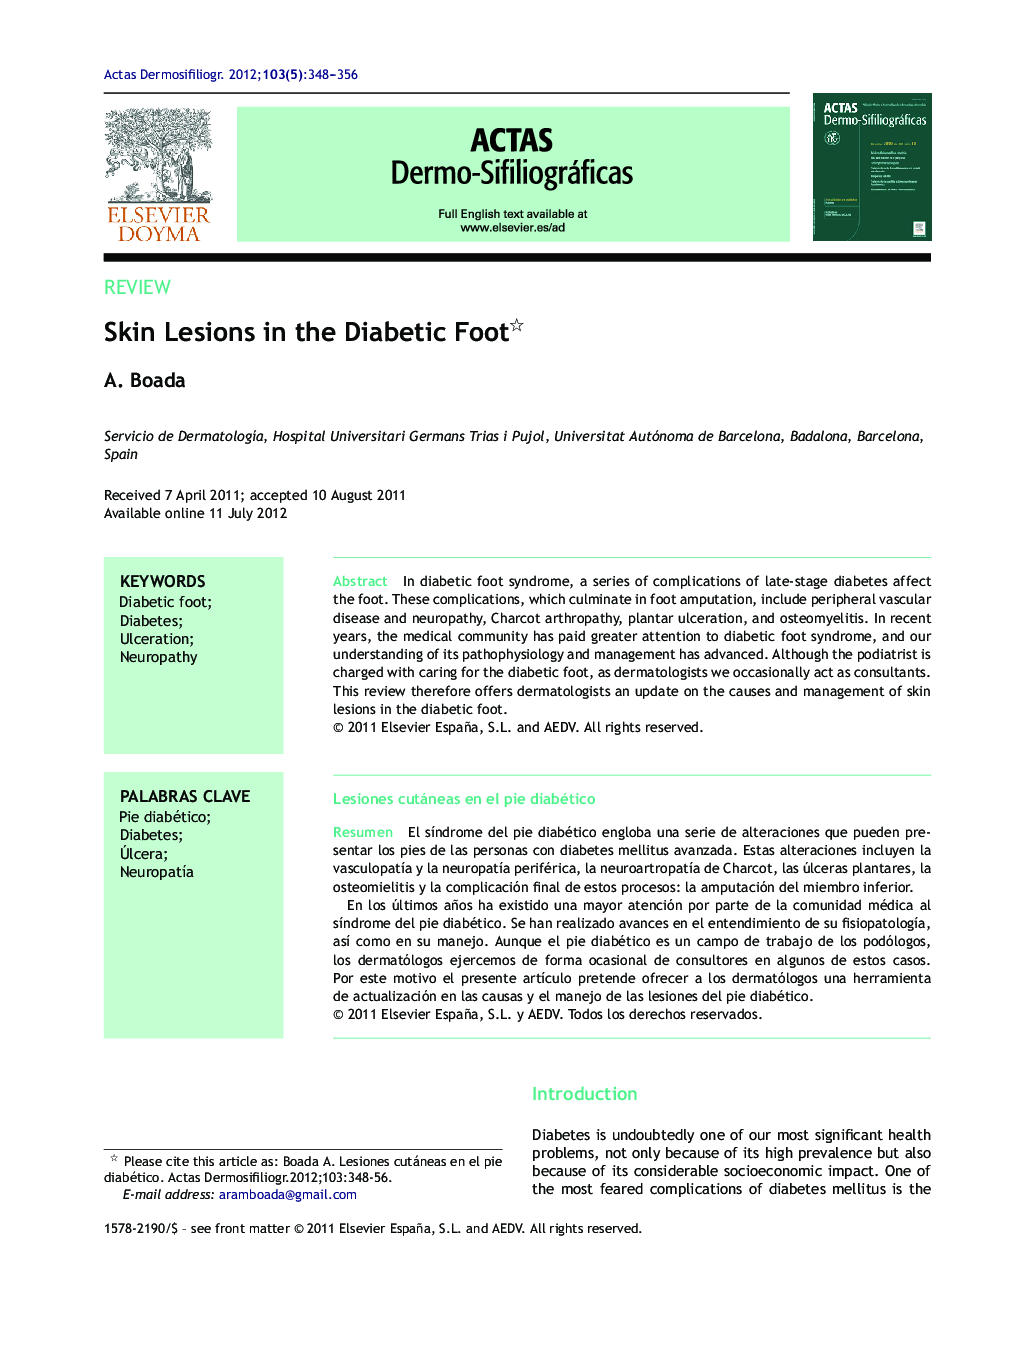 Skin Lesions in the Diabetic Foot 